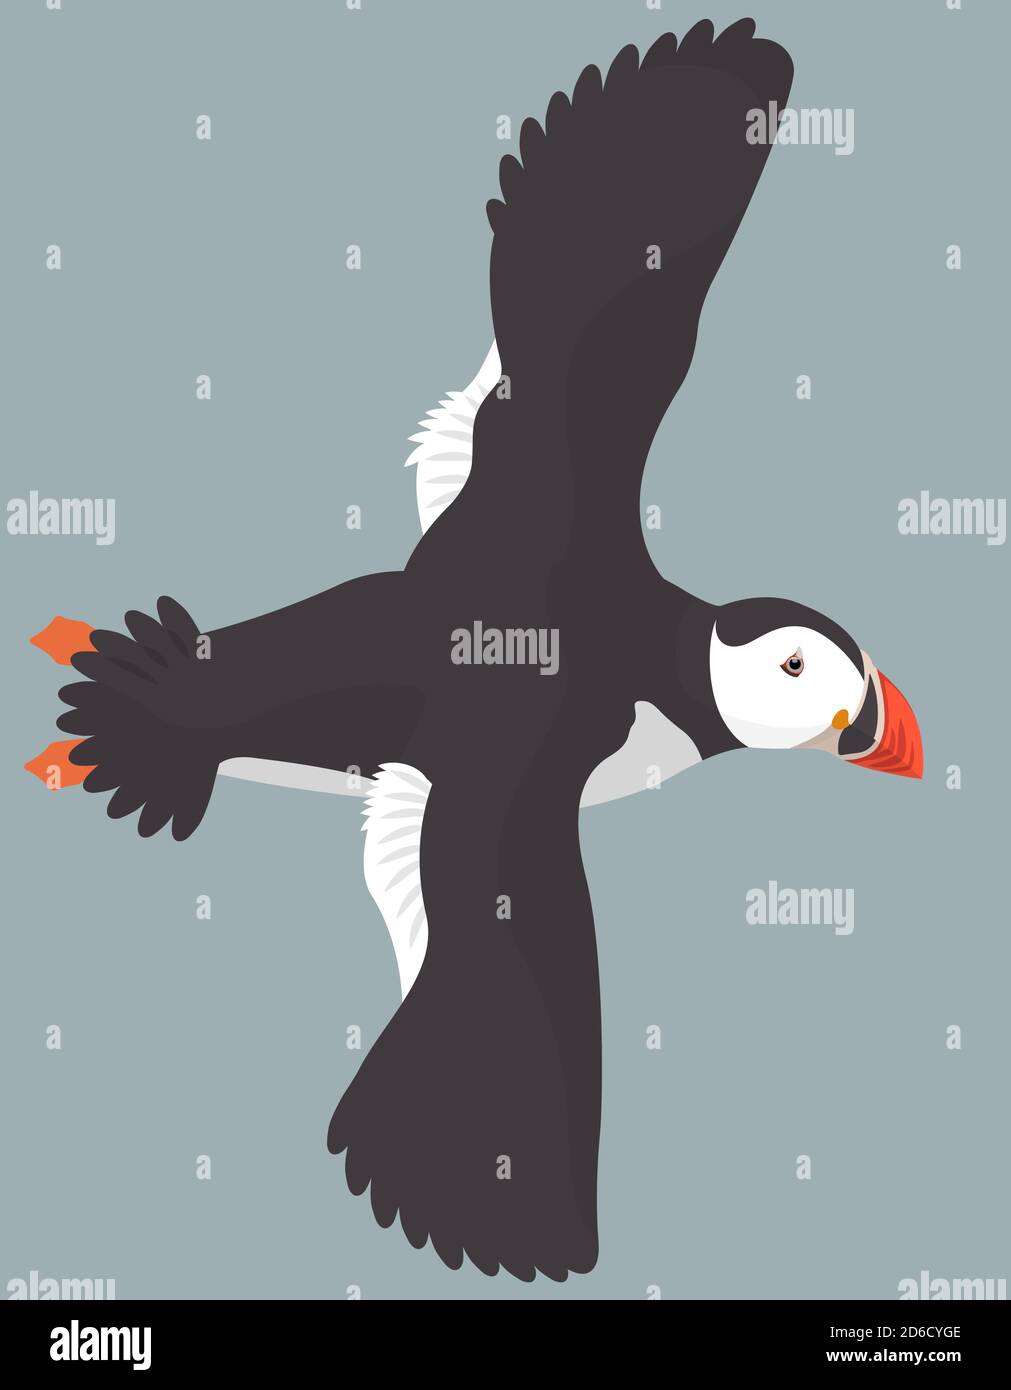 Flying Atlantic puffin. Northern bird in cartoon style. Stock Vector